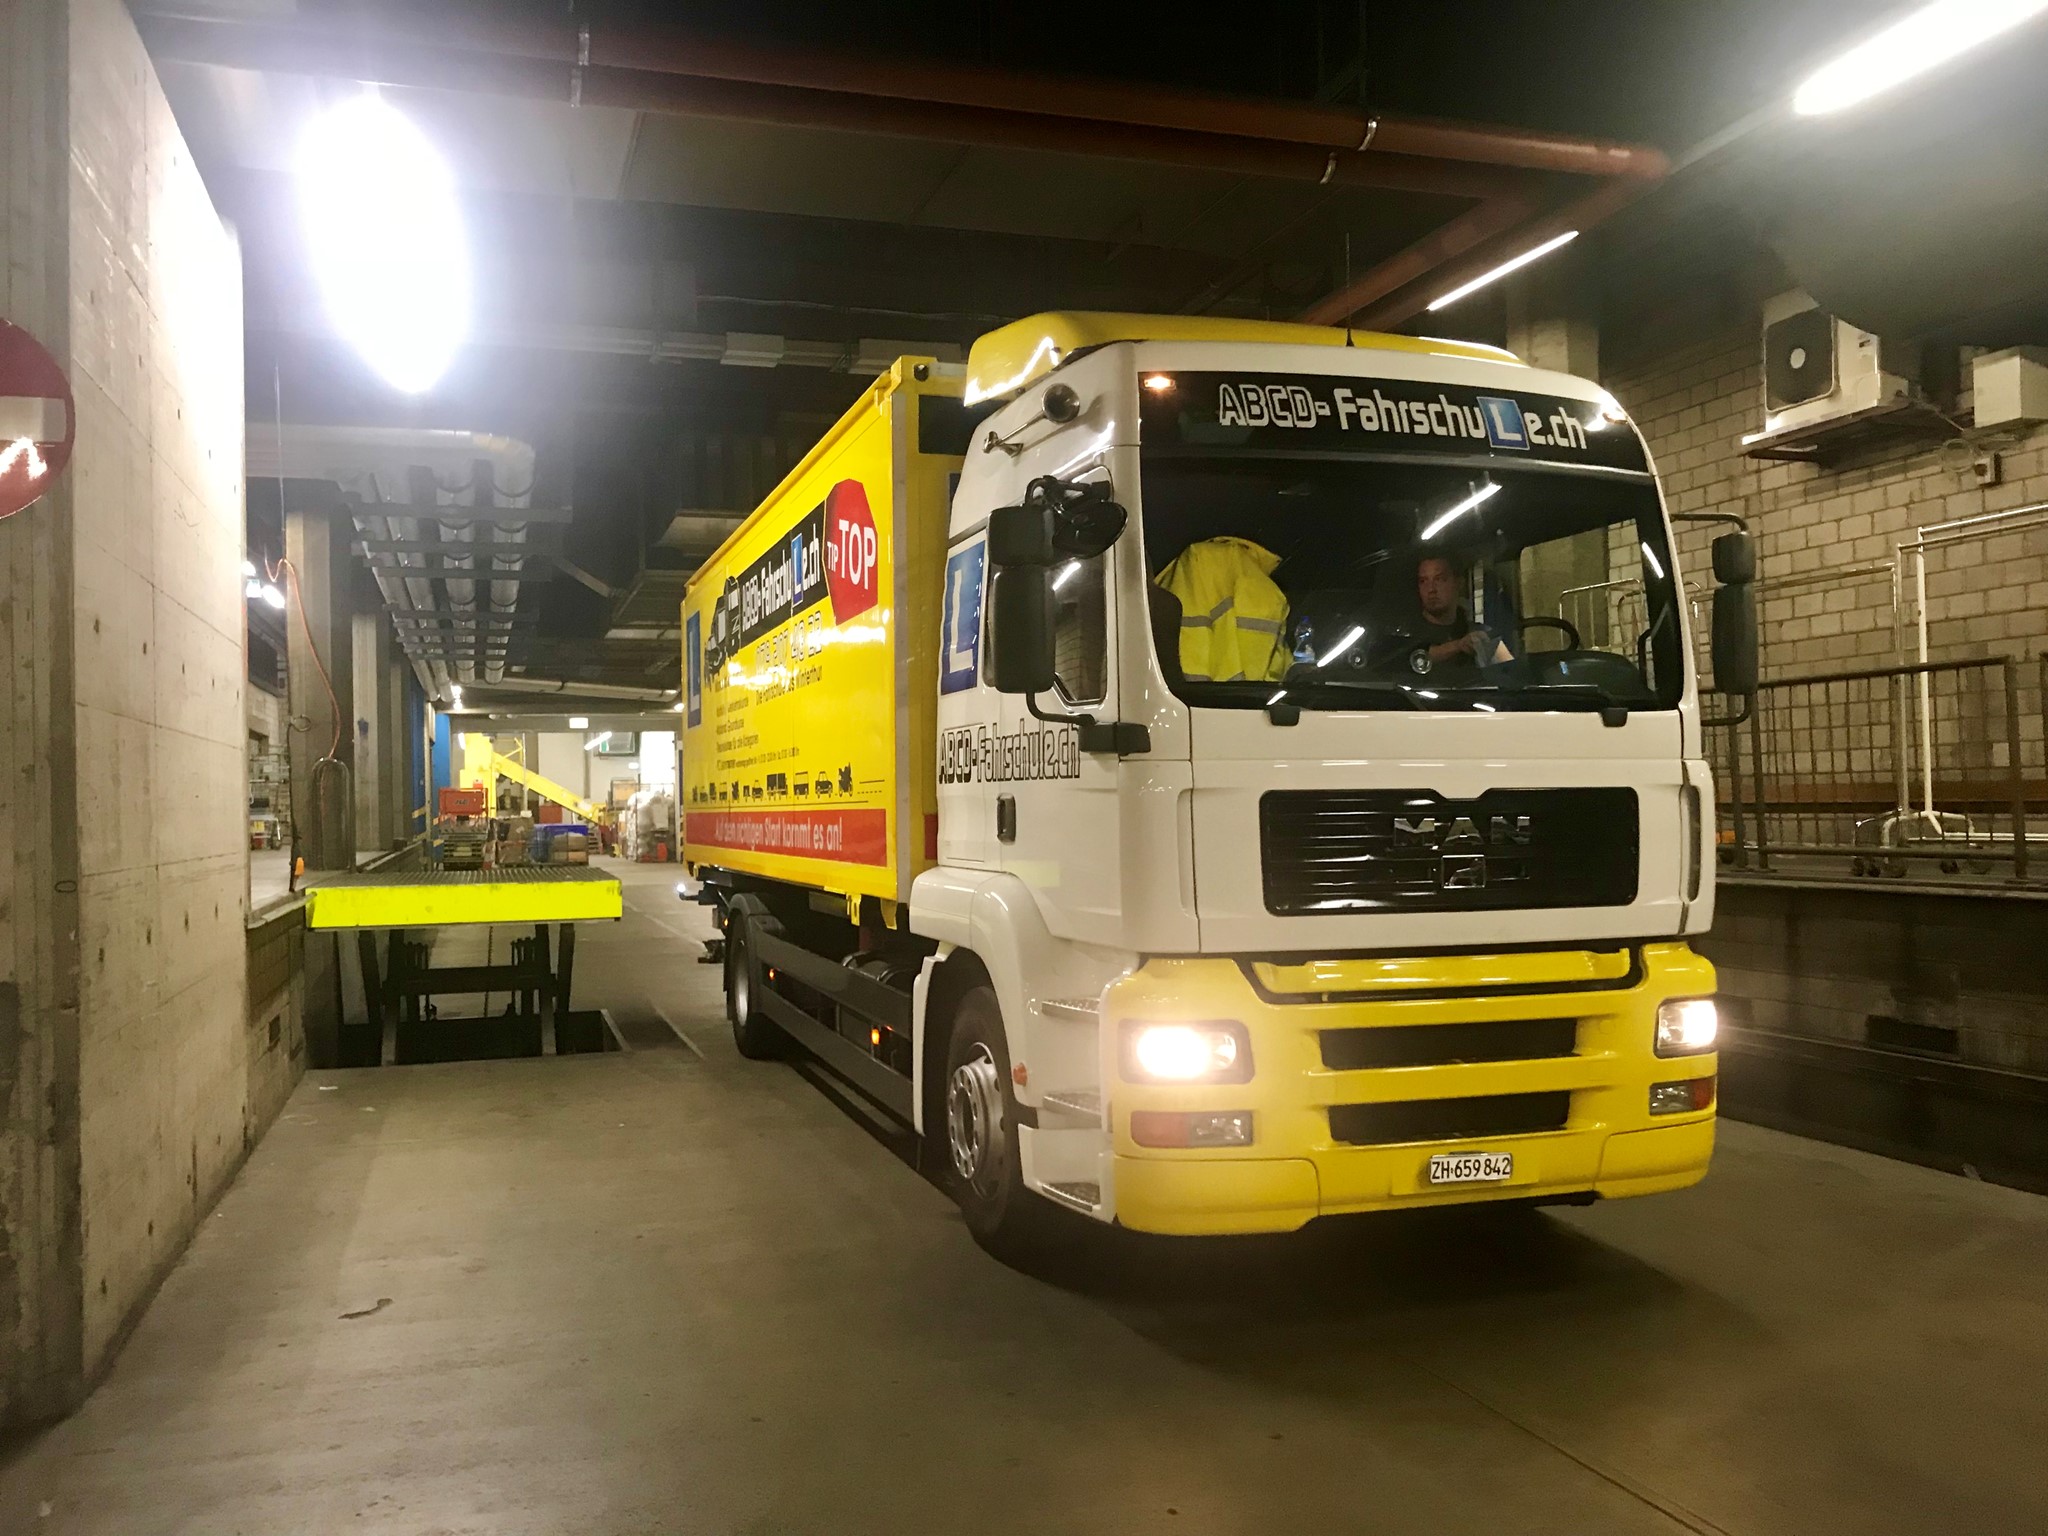 Lastwagen LKW Fahrschule aus Winterthur Kategorie C Ausbildung  Manöver Thema Seitärts an Rampe anfahren